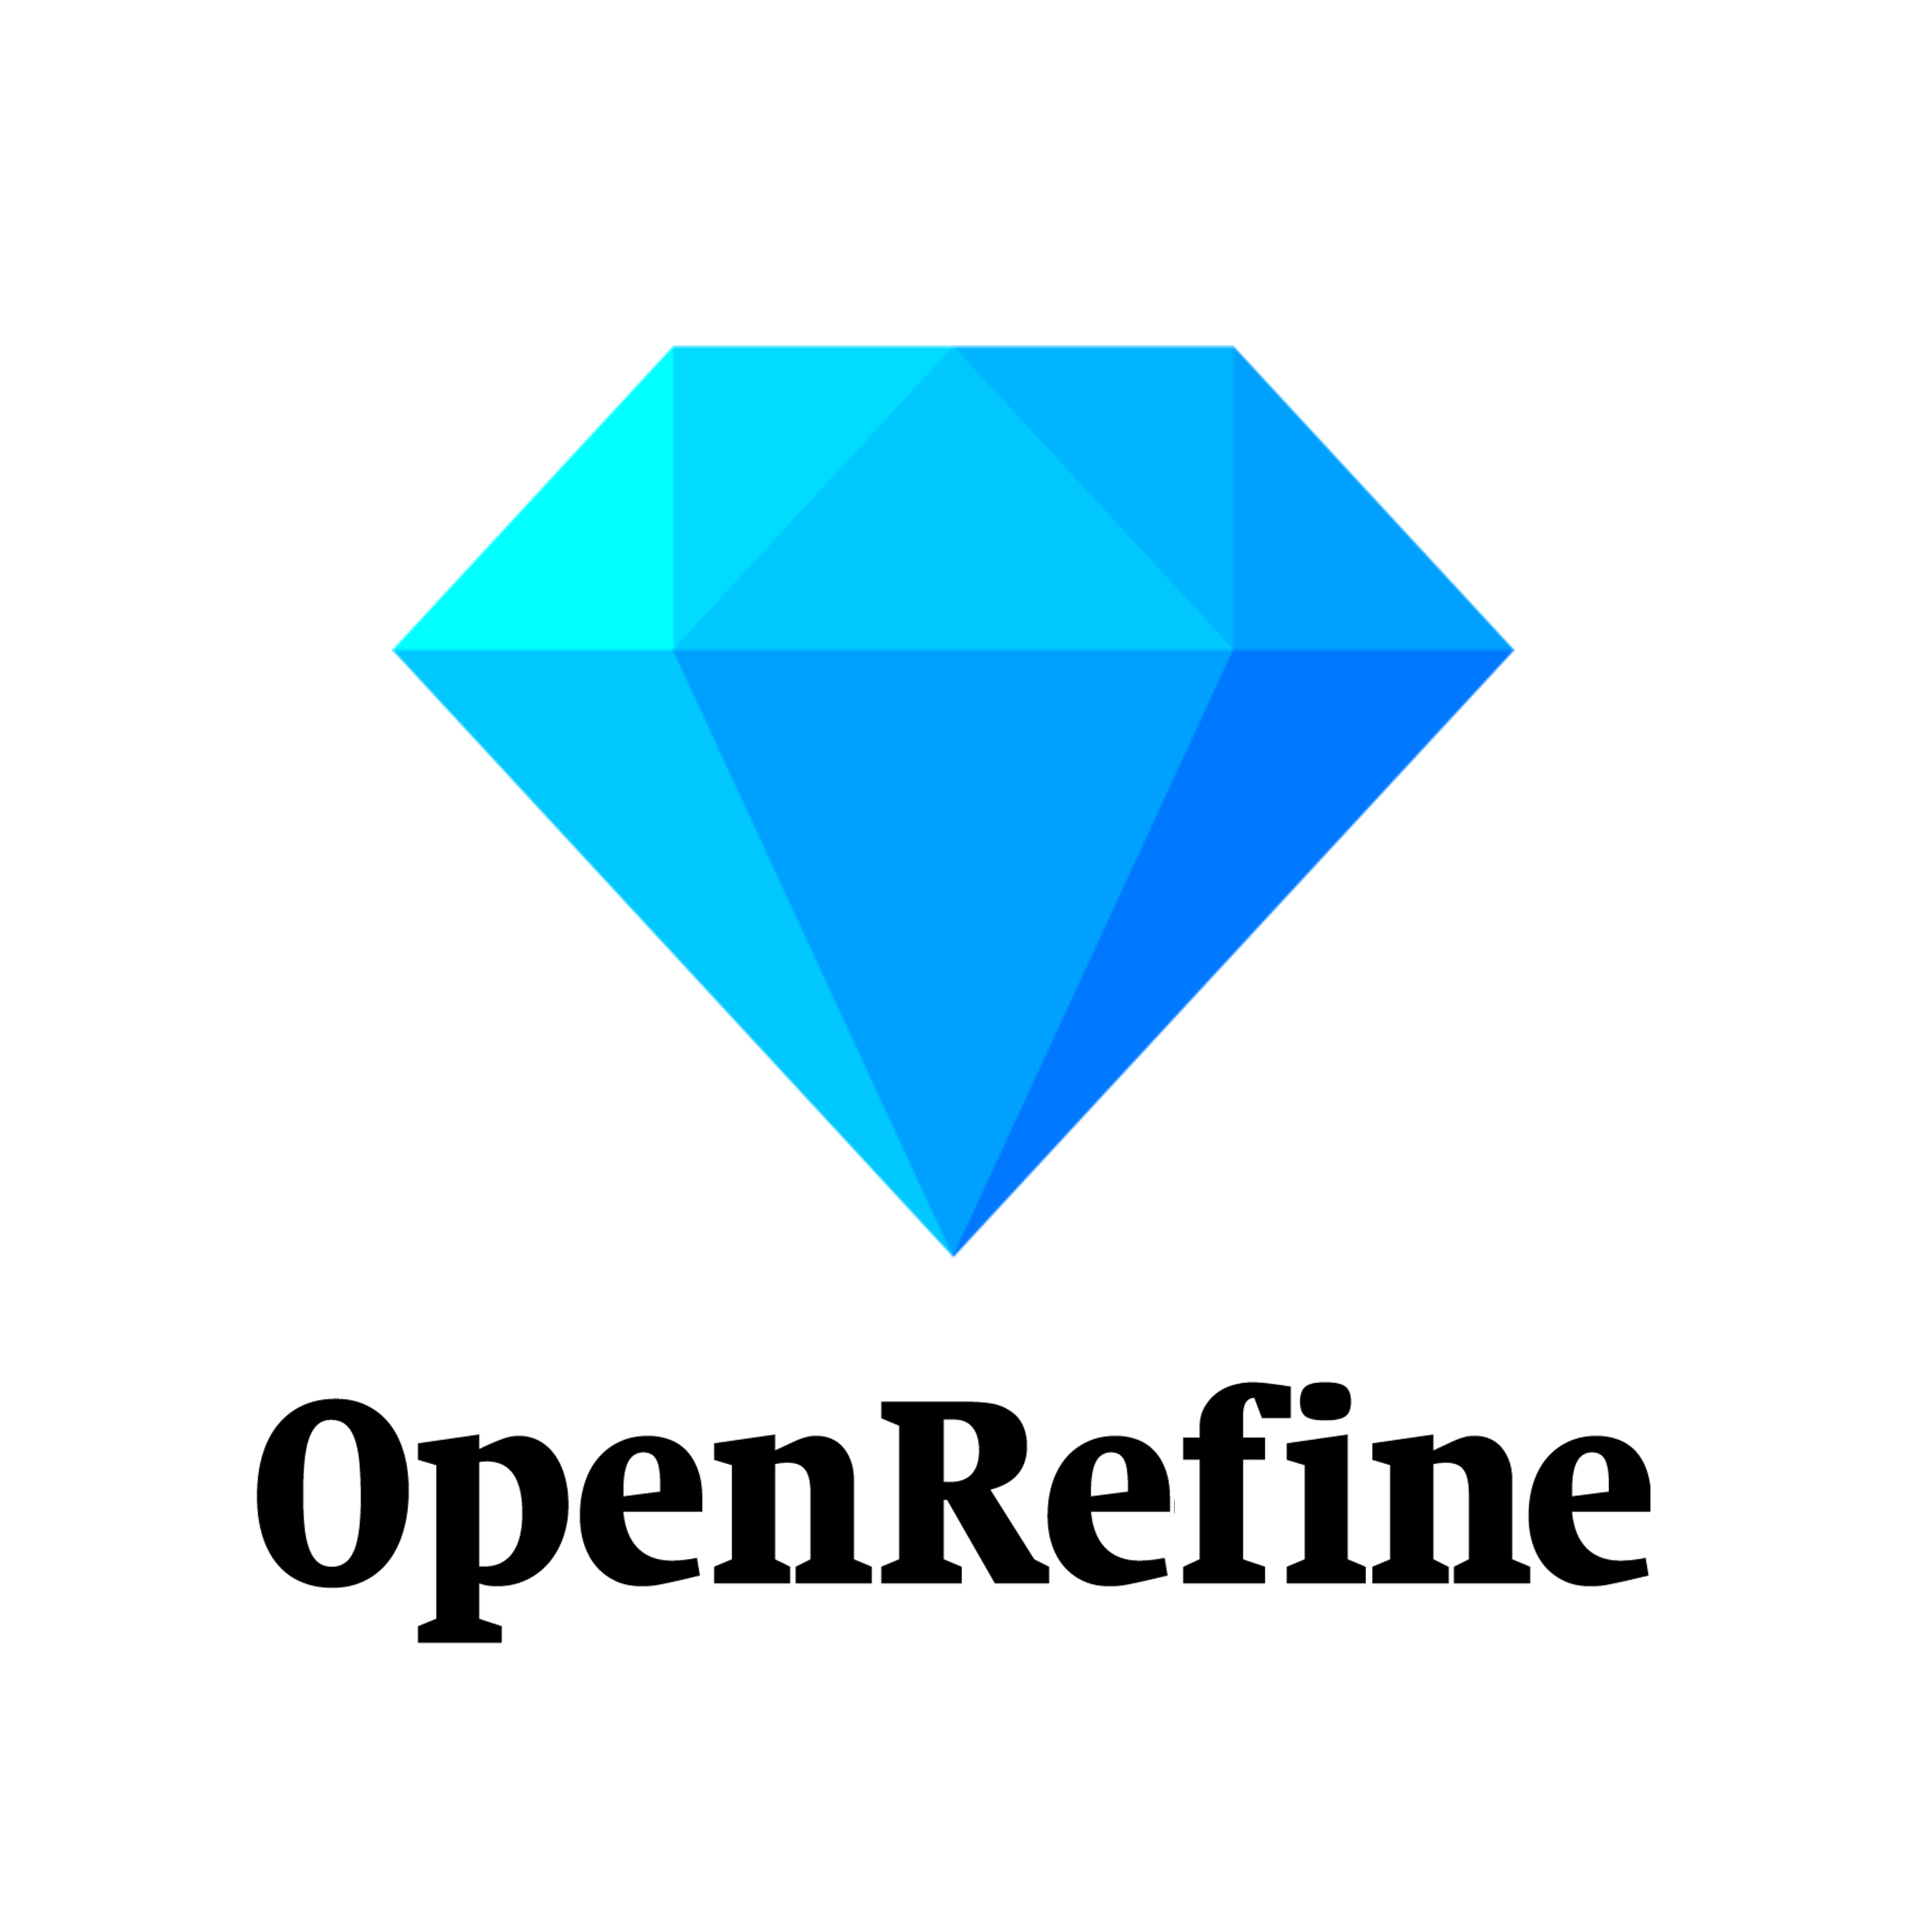 Open Refine